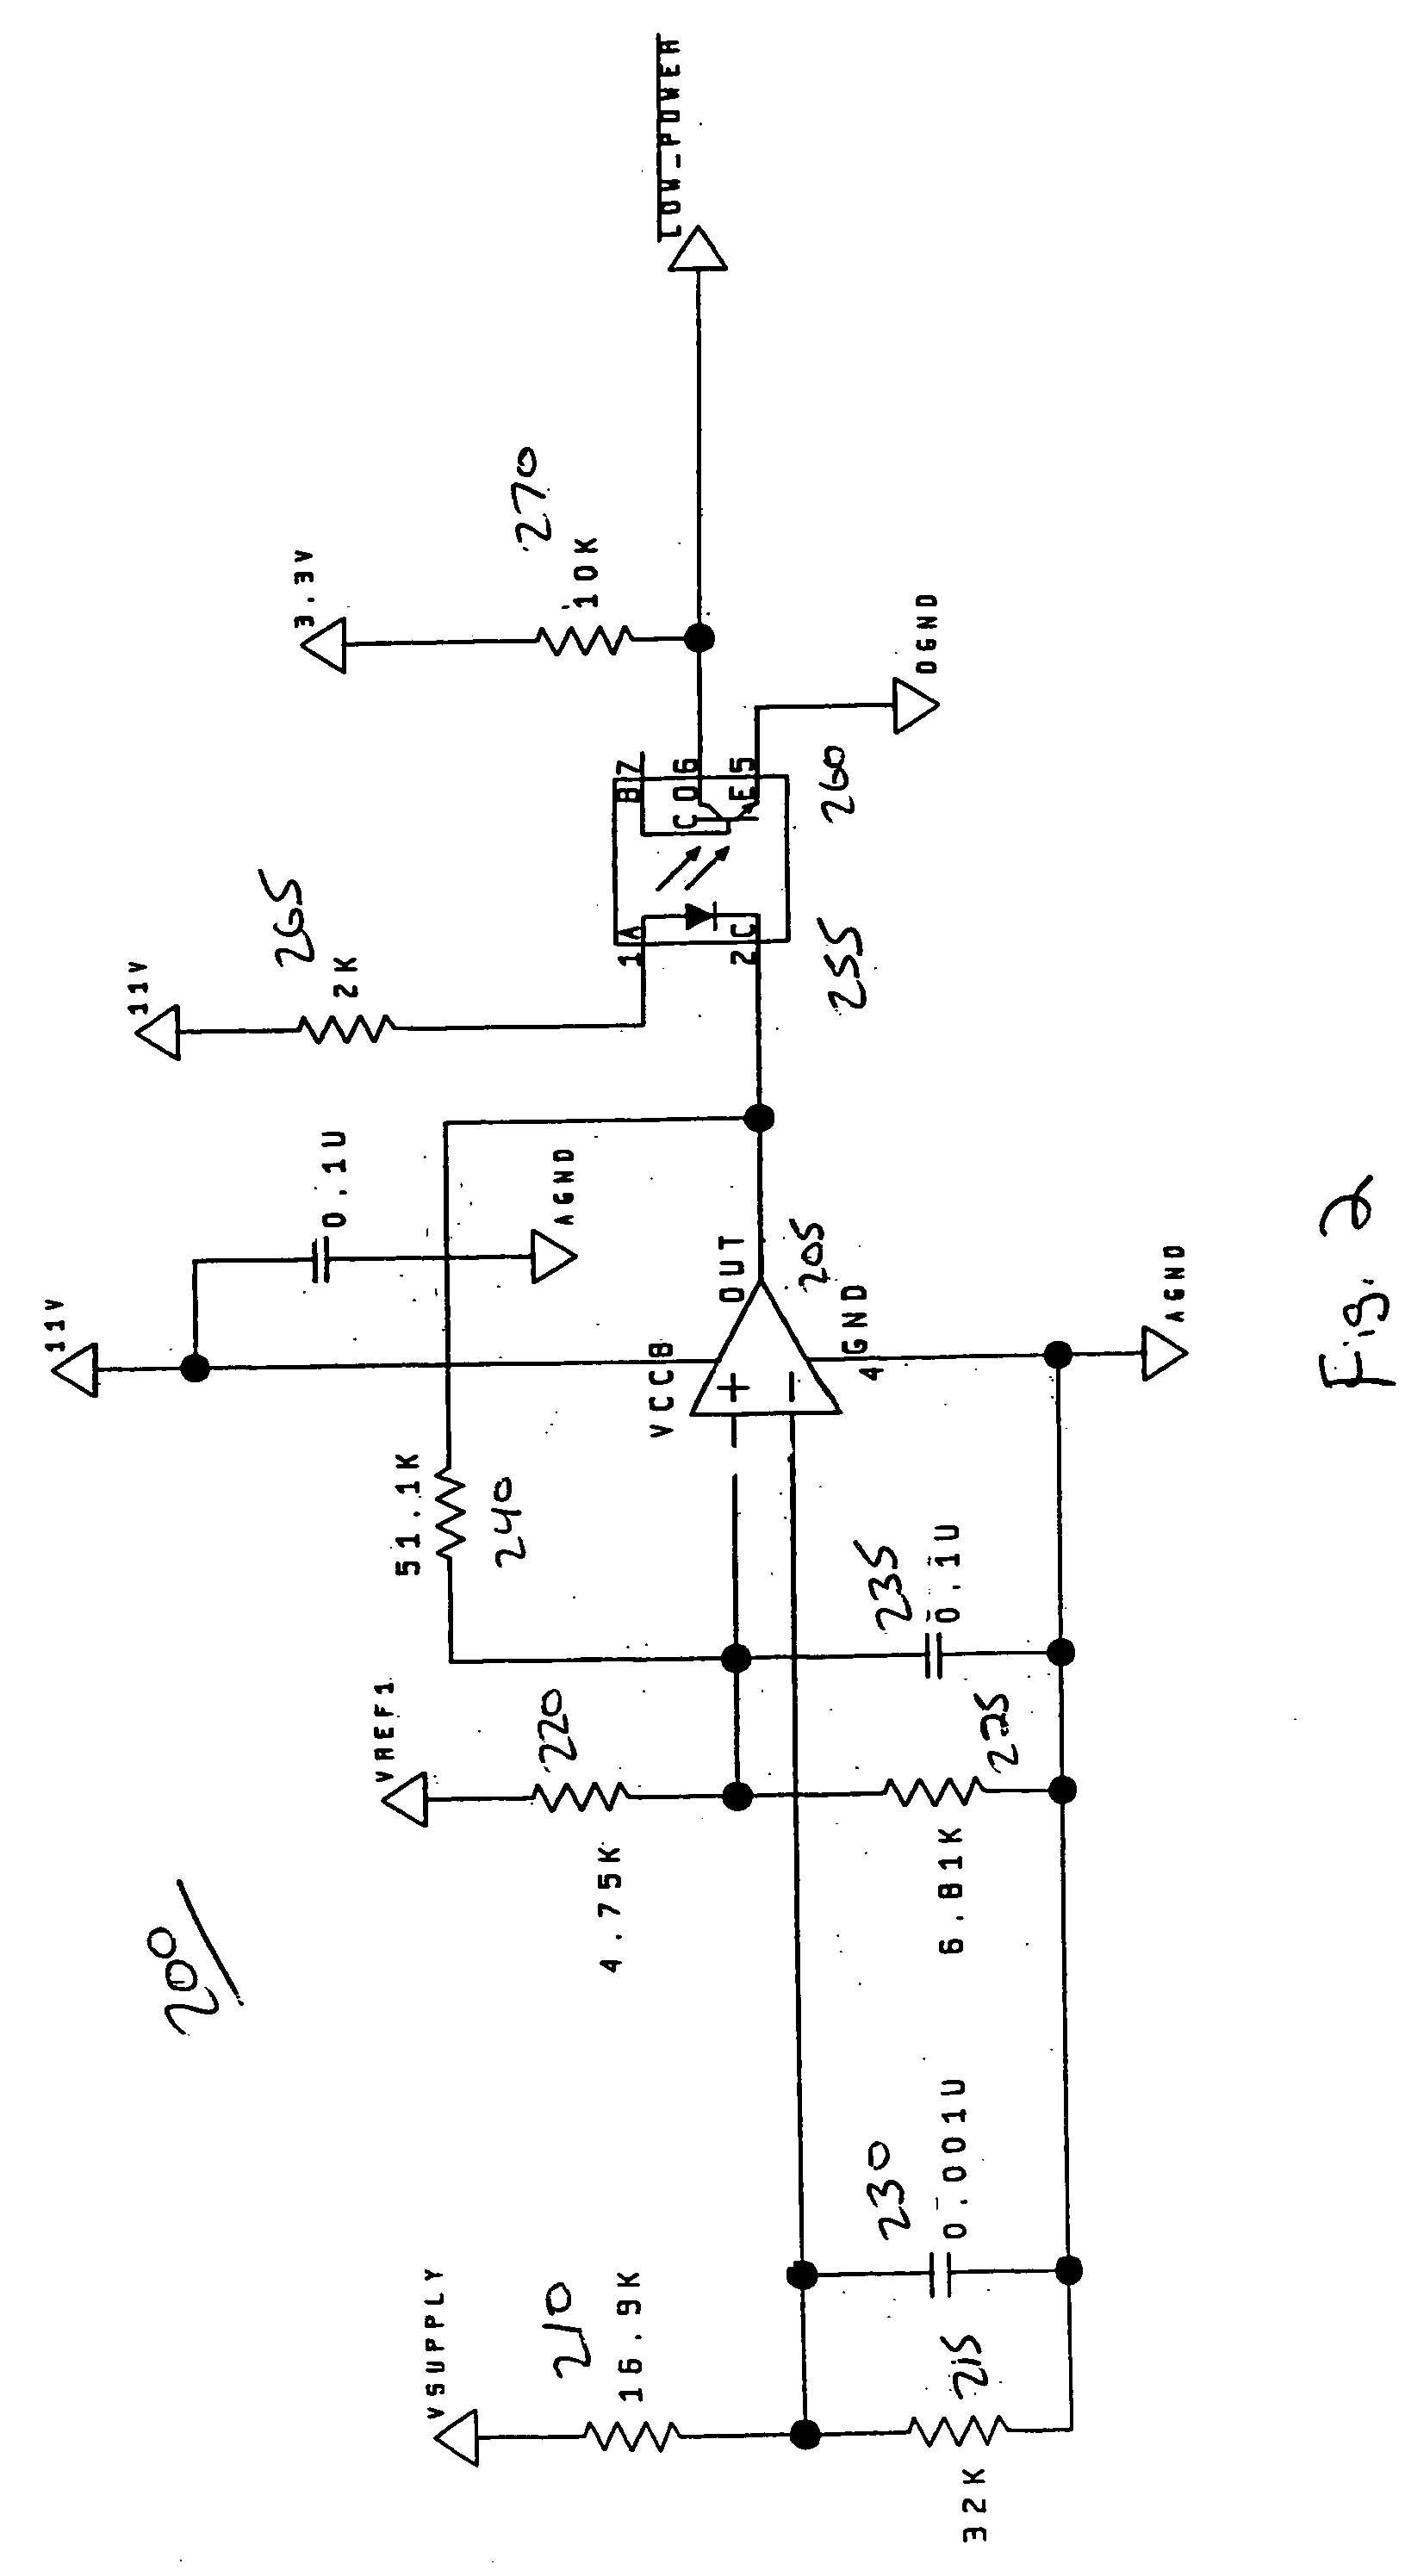 Fail-safe electric actuator using high voltage capacitors